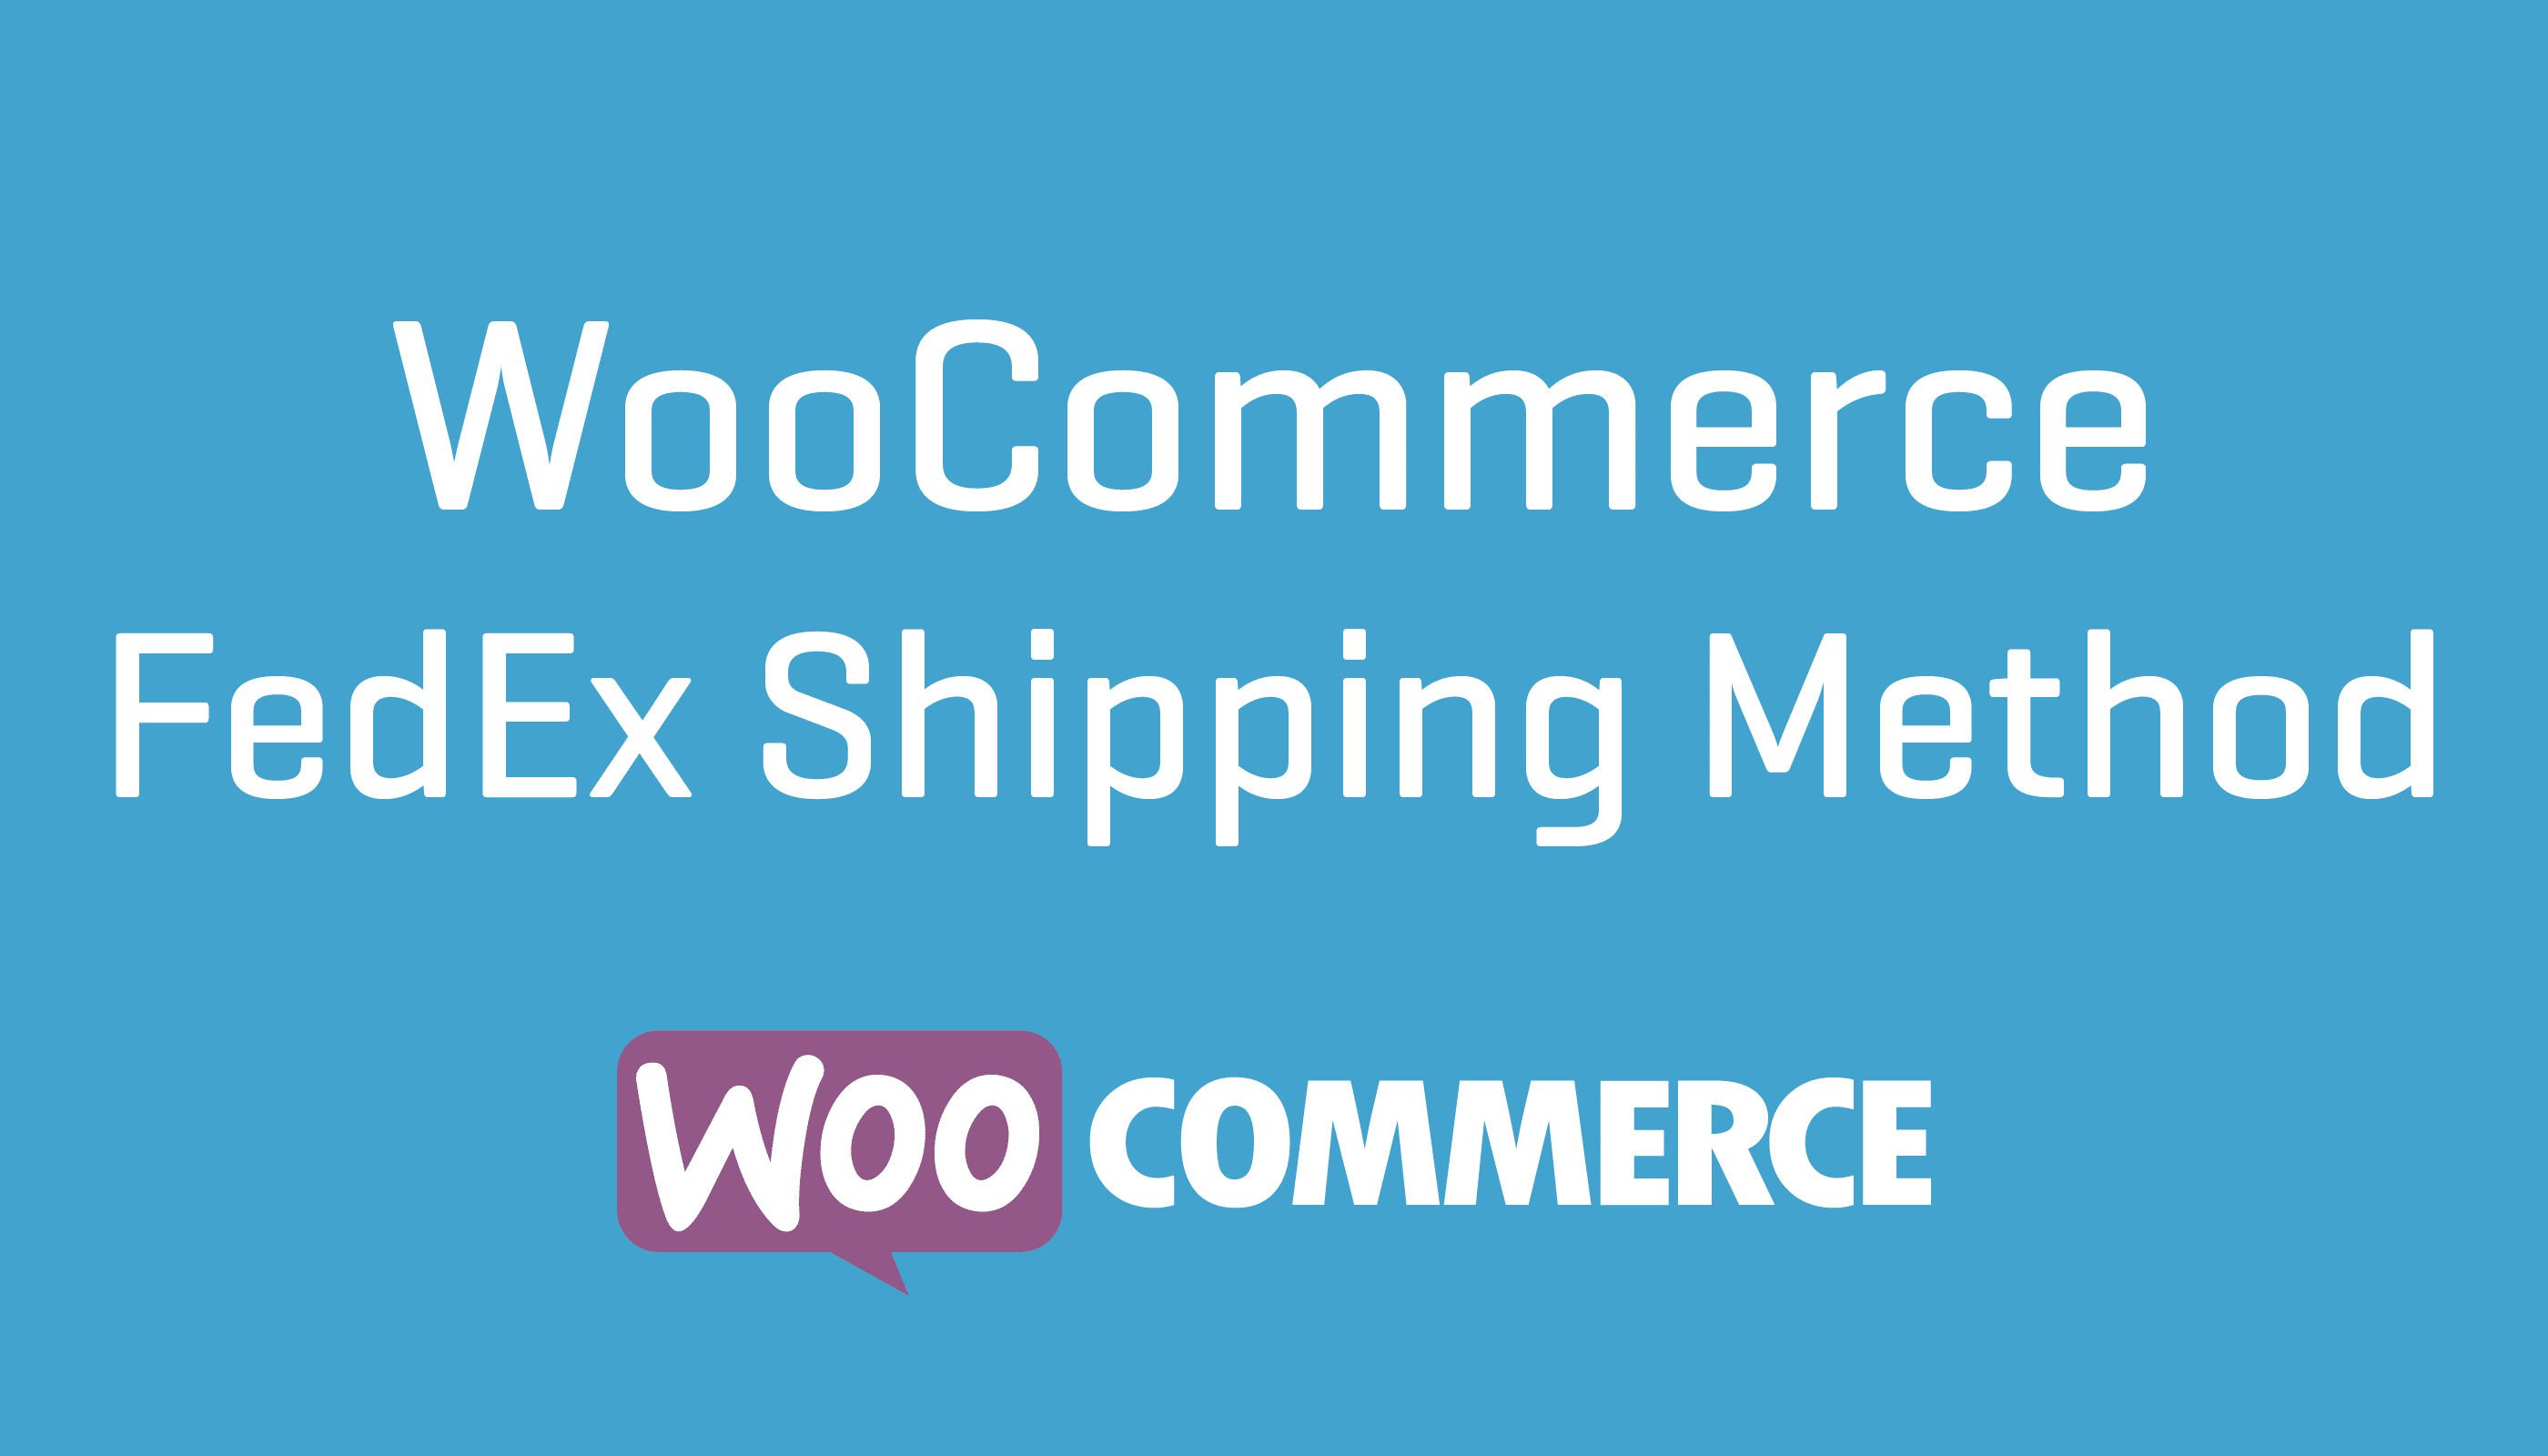 WooCommerce FedEx Shipping Method.jpg